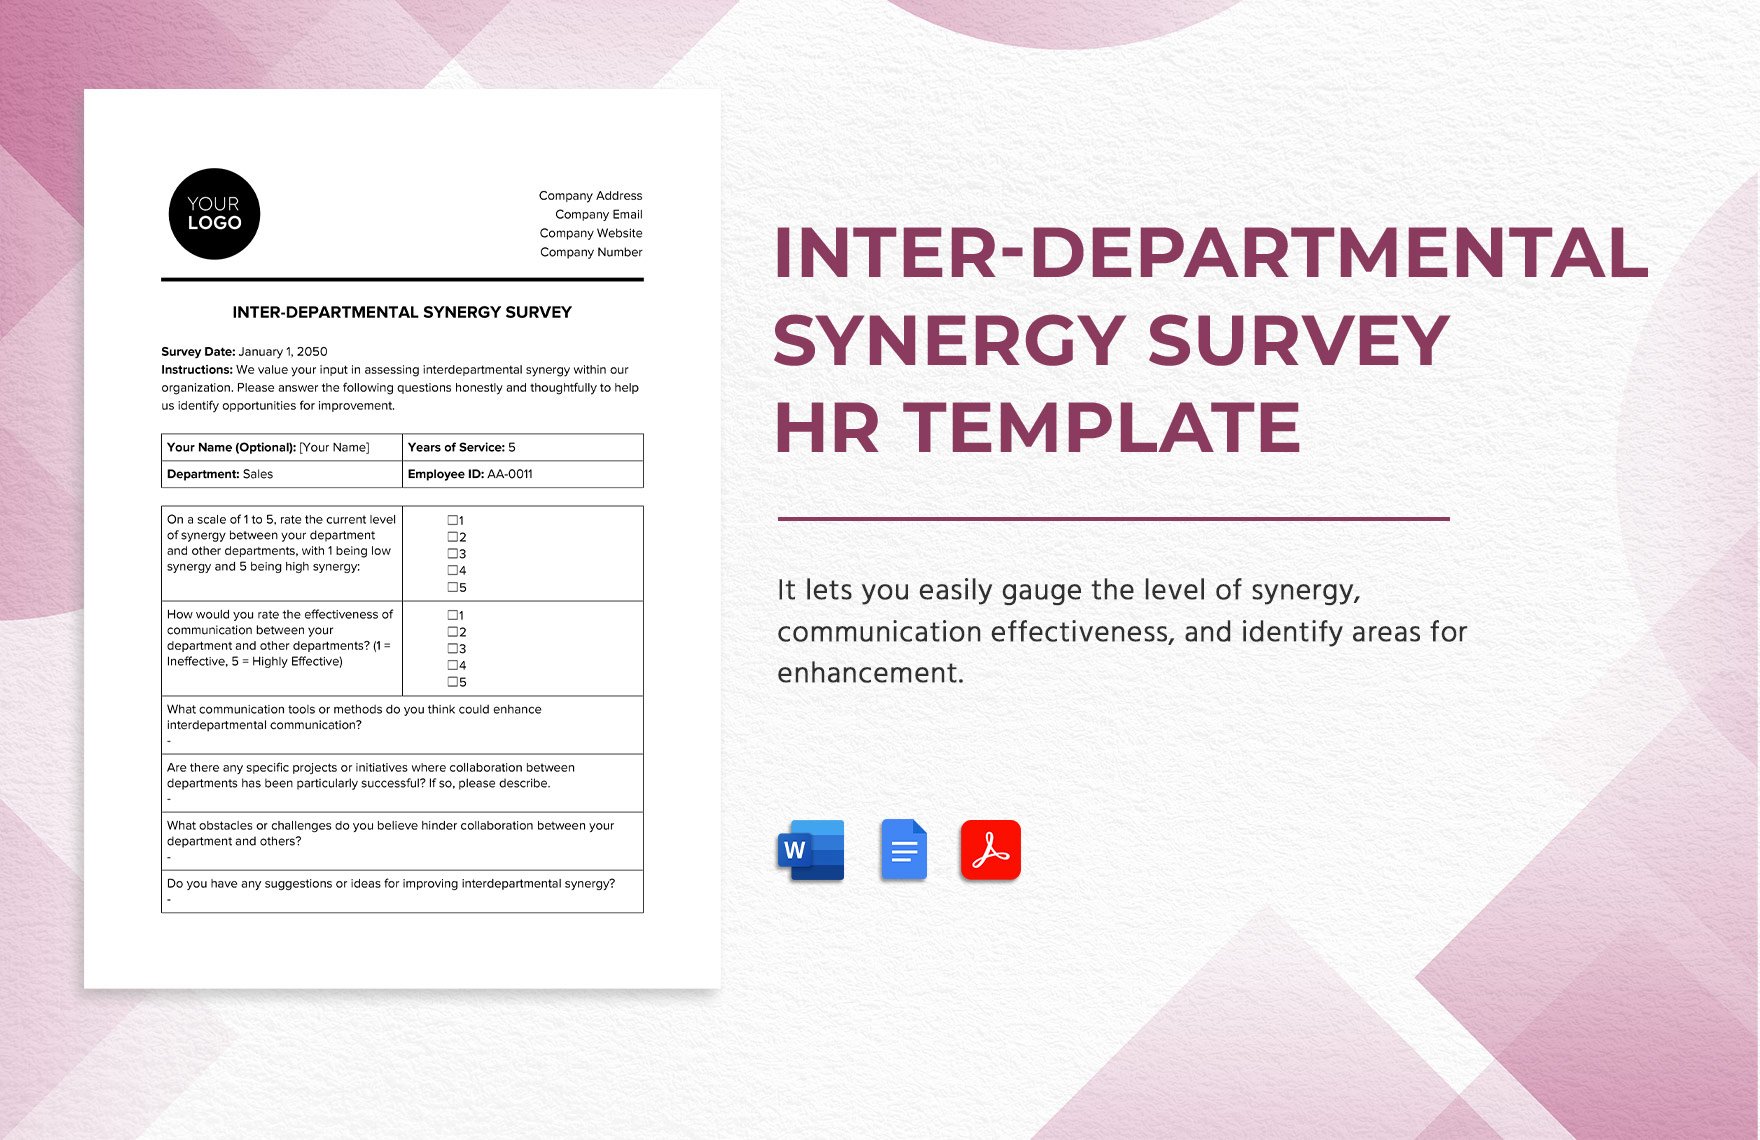 Inter-departmental Synergy Survey HR Template